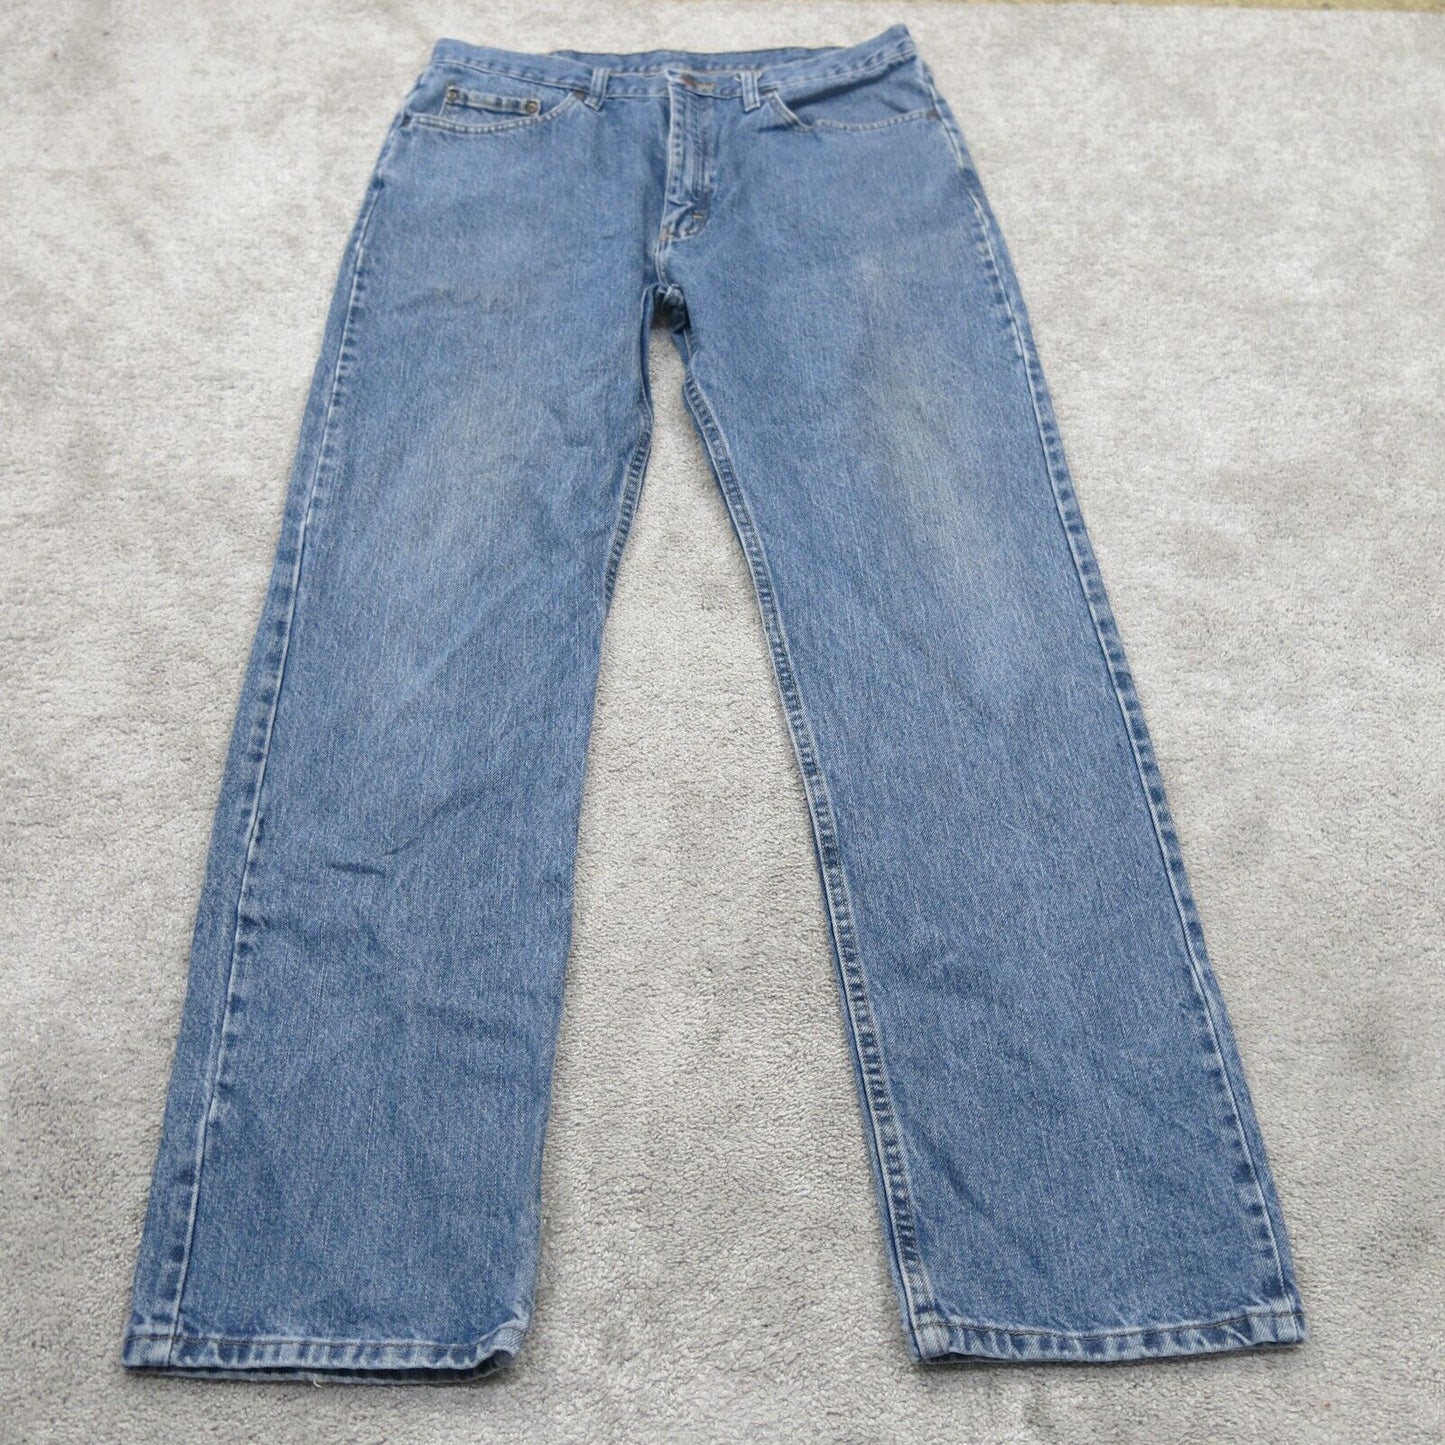 Wrangler Mens Denim Jeans Straight Leg 100% Cotton High Rise Blue Size W36XL34